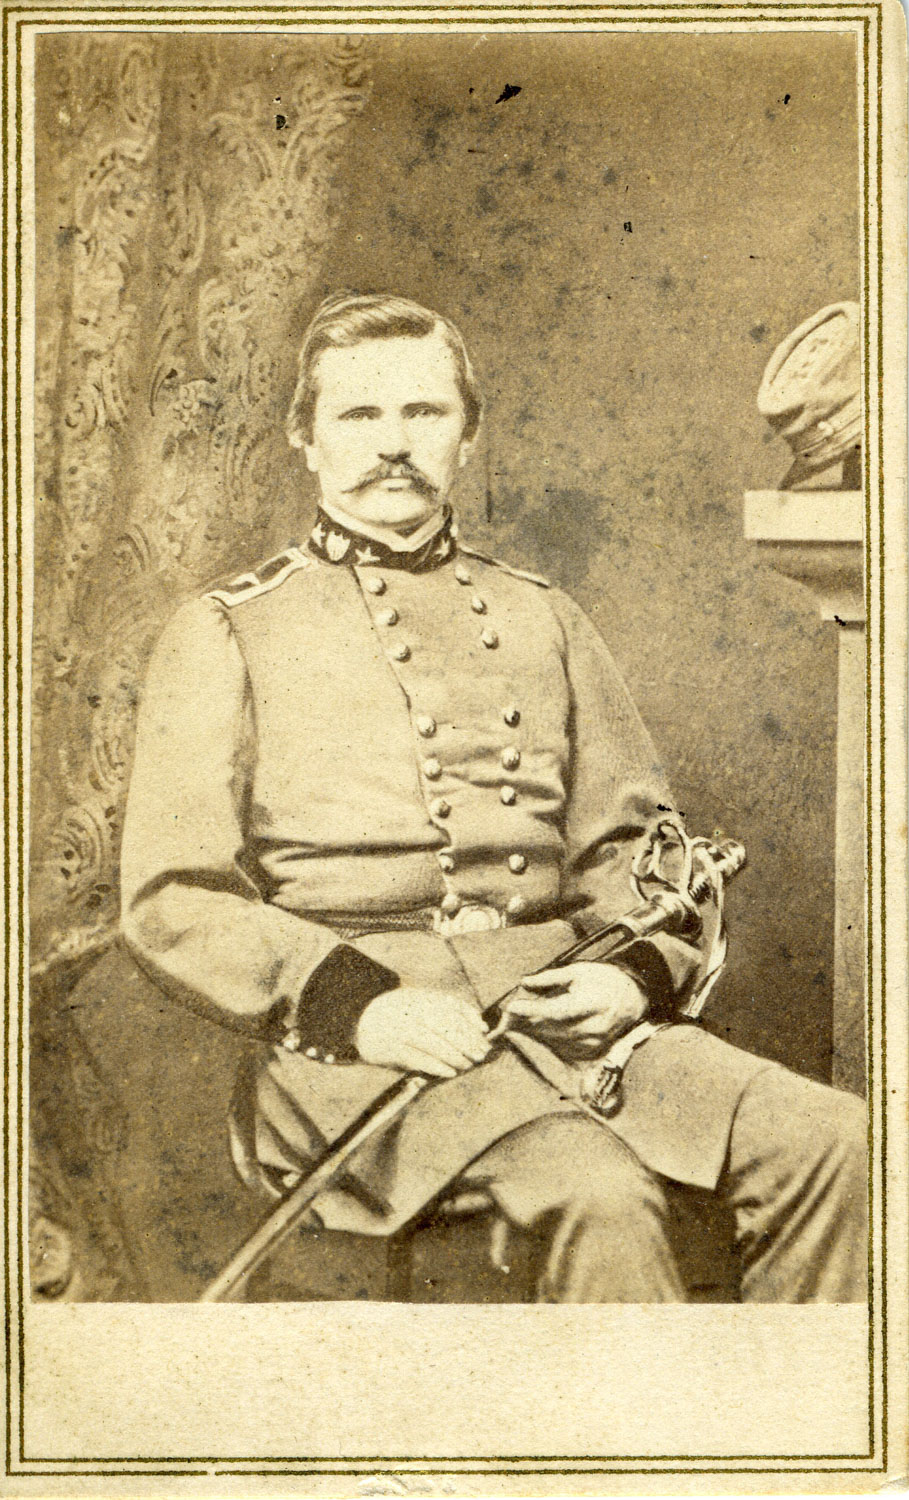 Lieutenant General Simon Bolivar Buckner